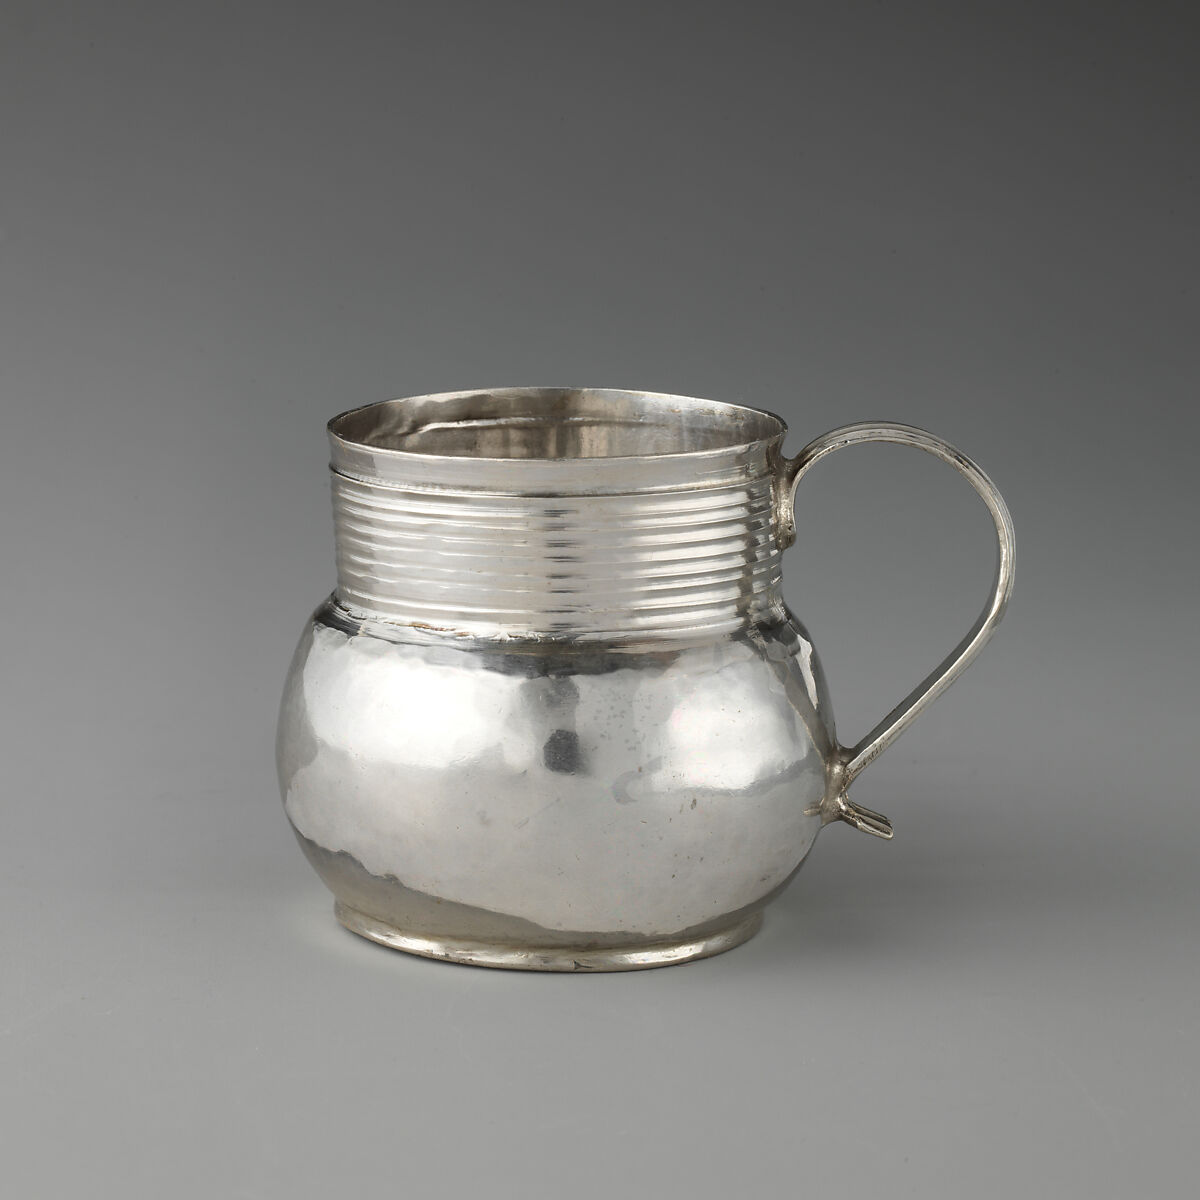 Miniature mug, B M (British, mid-late 17th century), Silver, British, London 